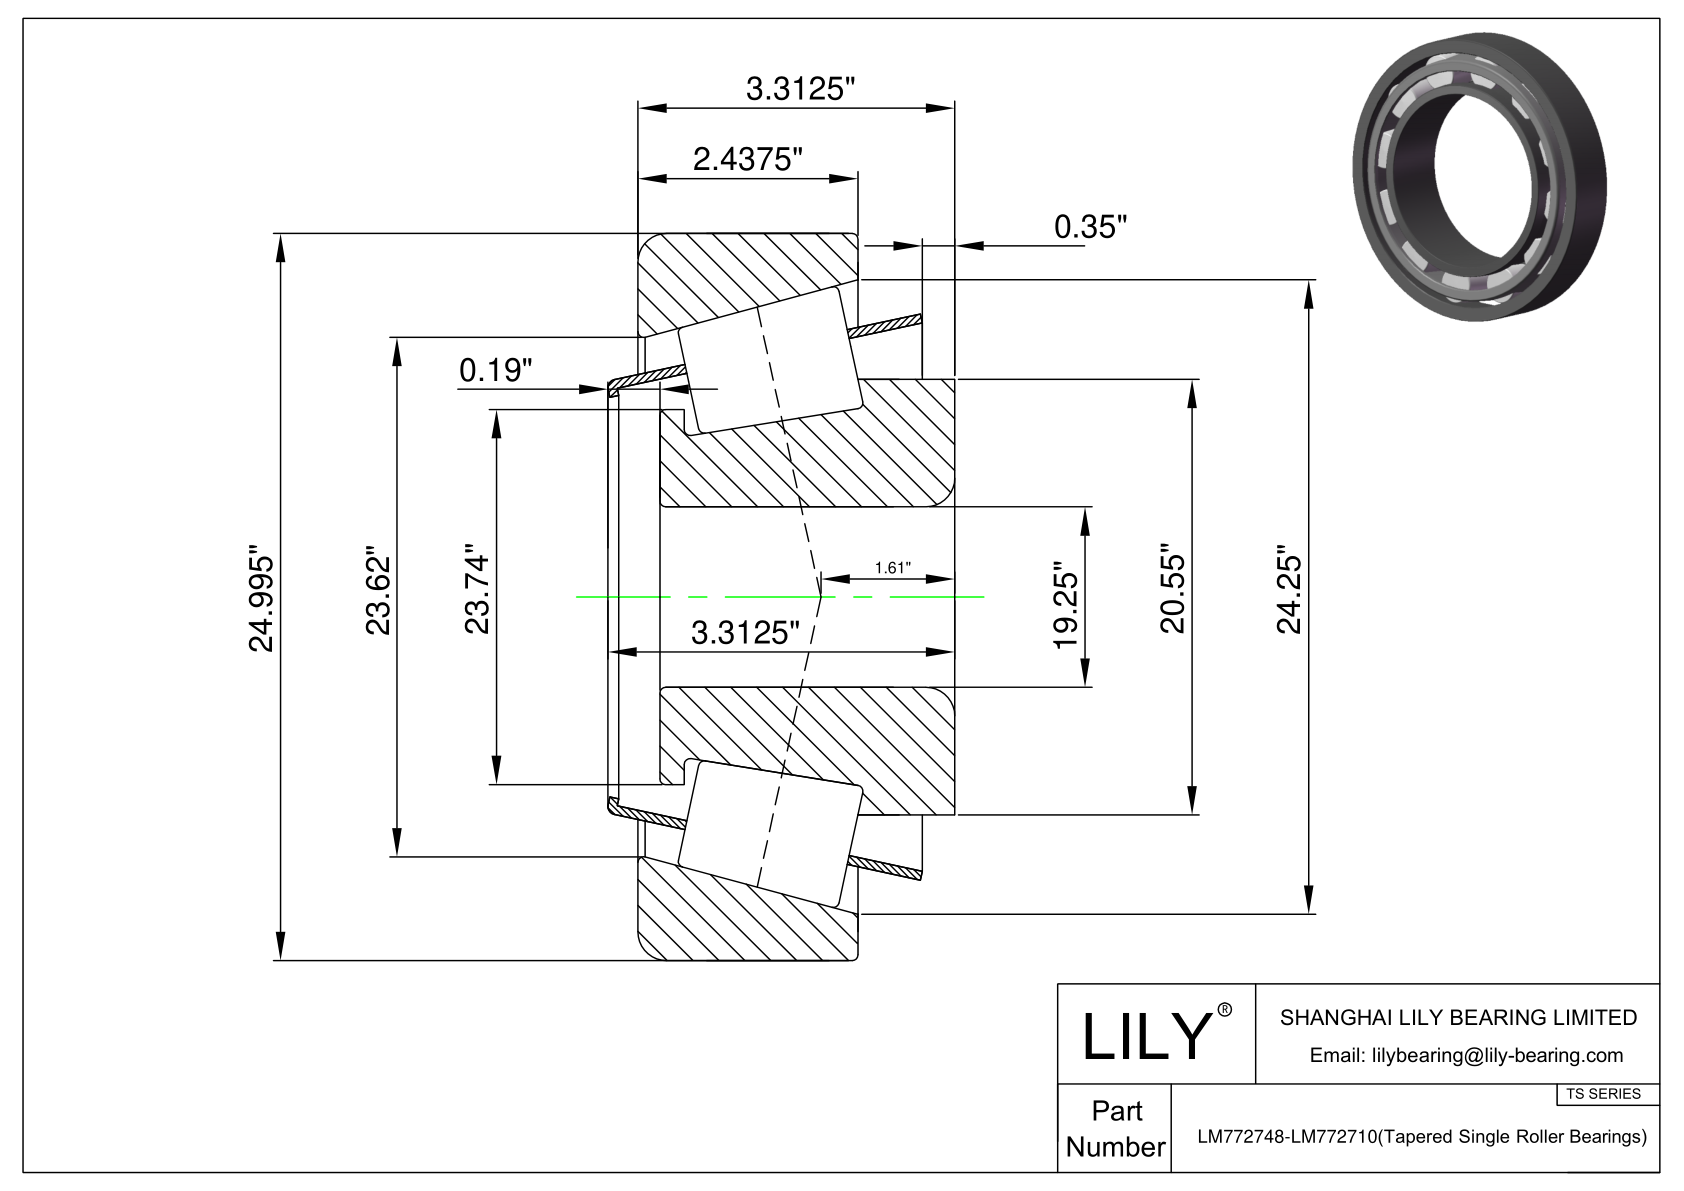 LM772748-LM772710 TS系列(圆锥单滚子轴承)(英制) CAD图形